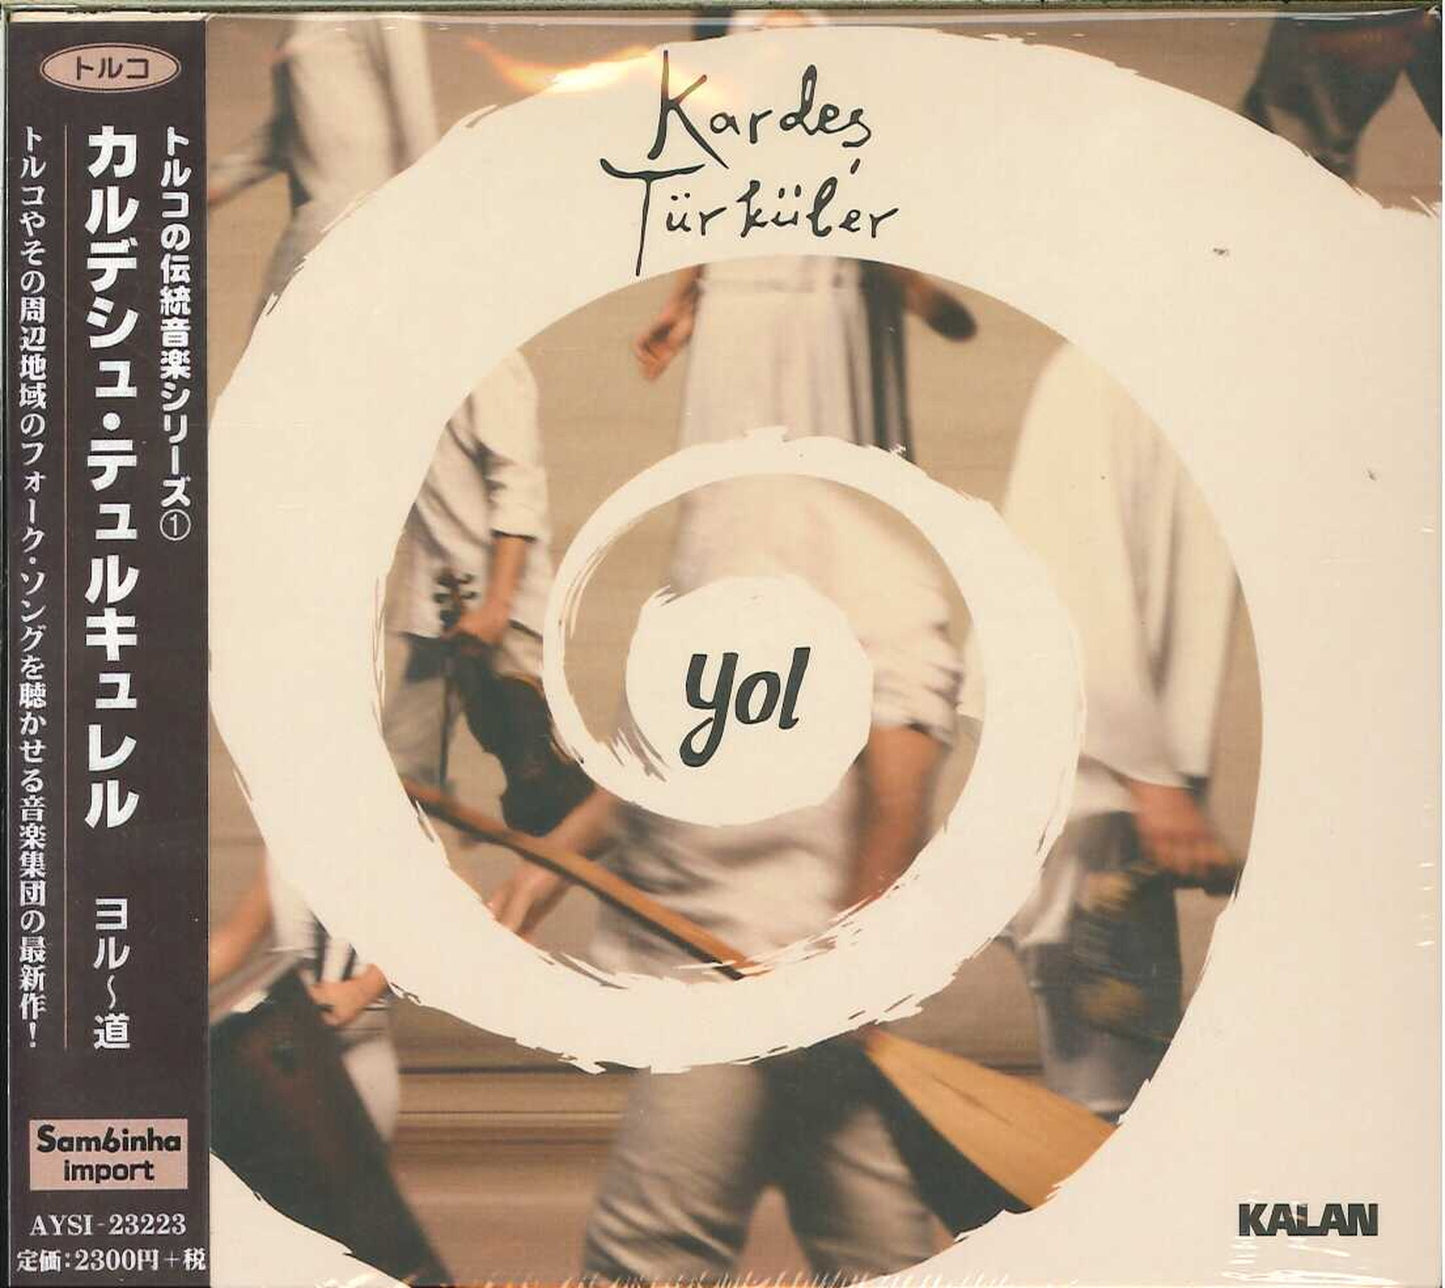 Kardes Turkuler - Yol - Japan CD